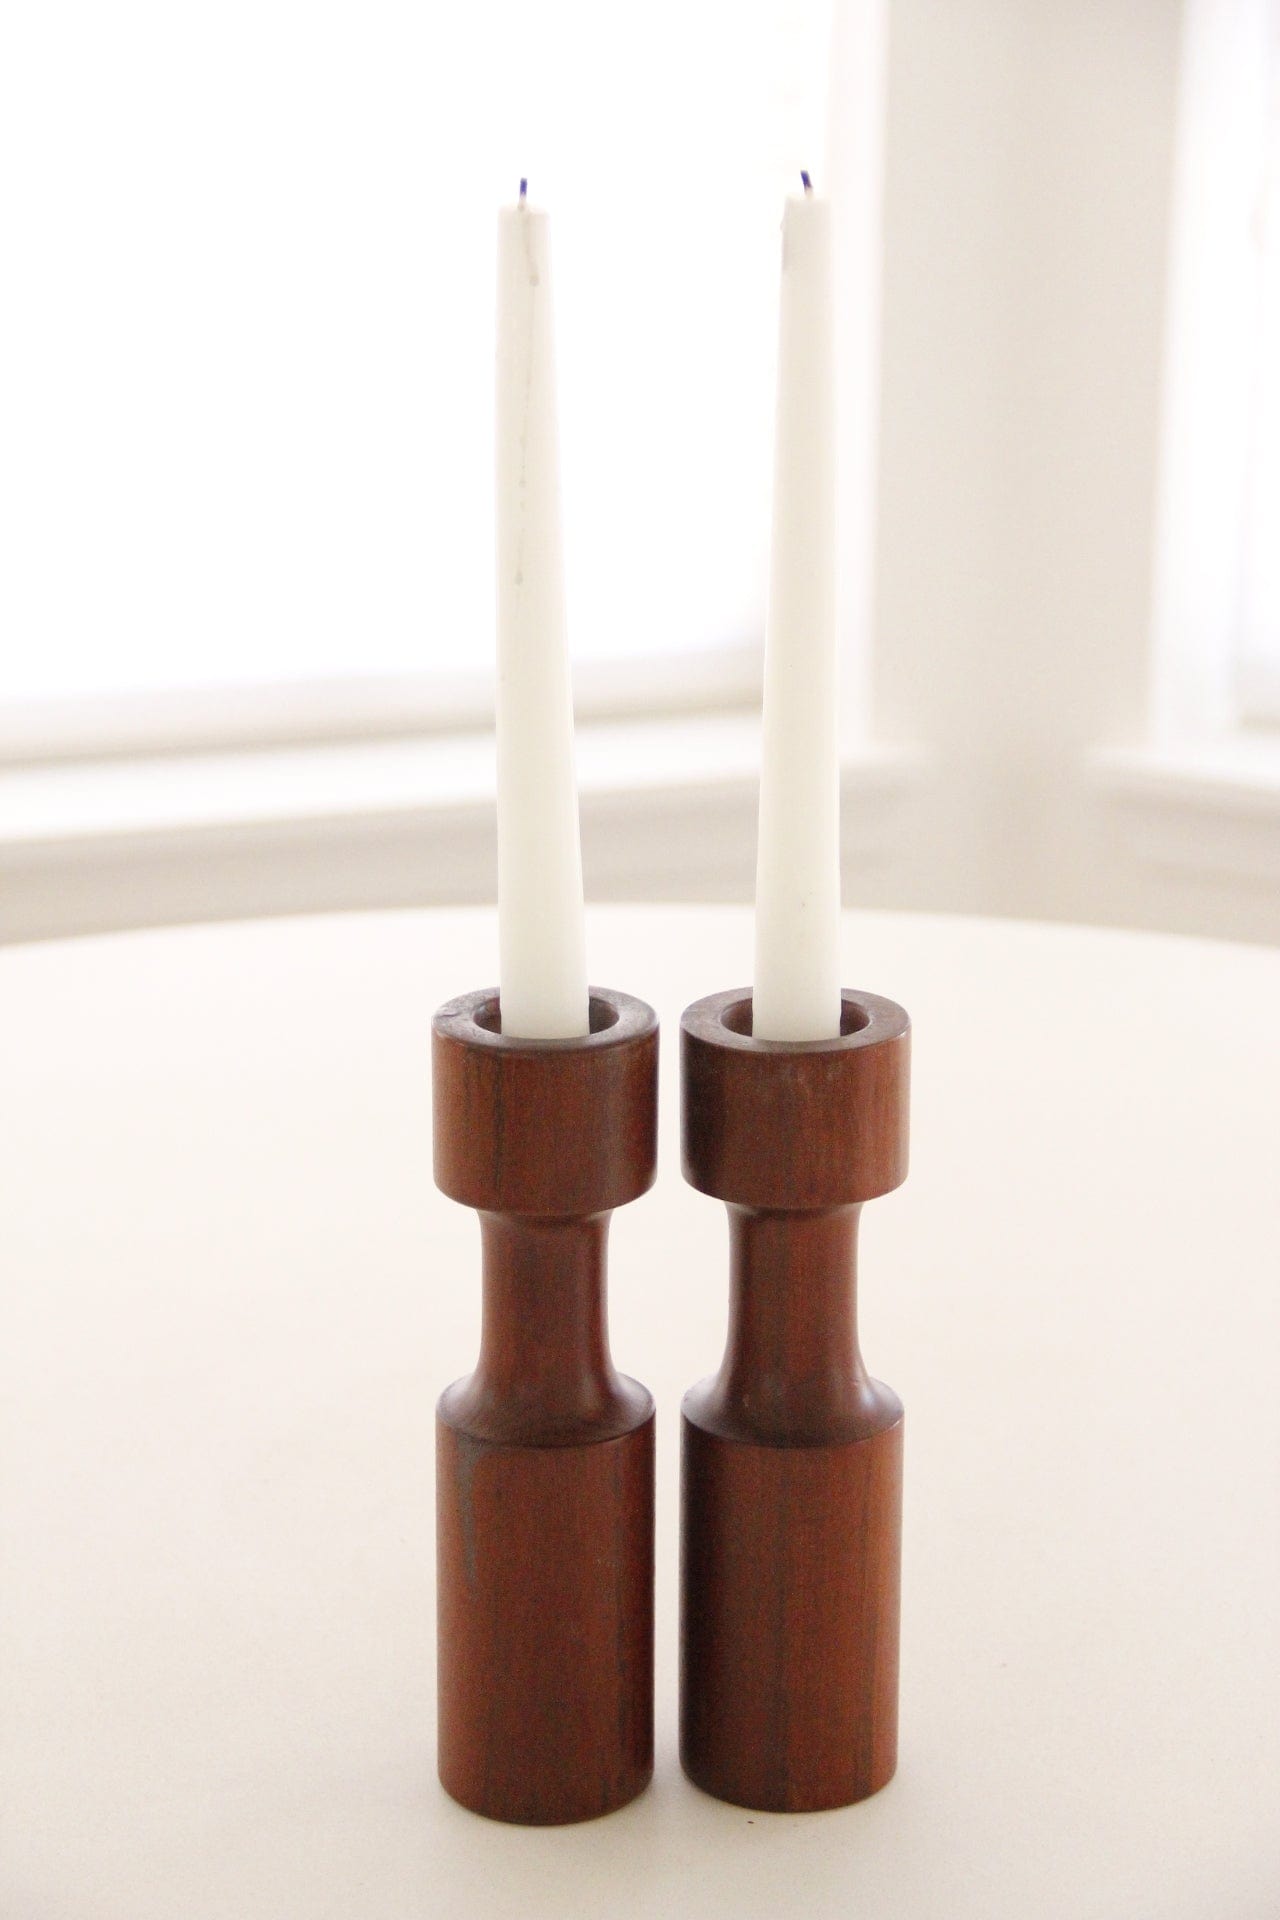 Midcentury Danish Modern Teak Candle Holders | Pair - Debra Hall Lifestyle